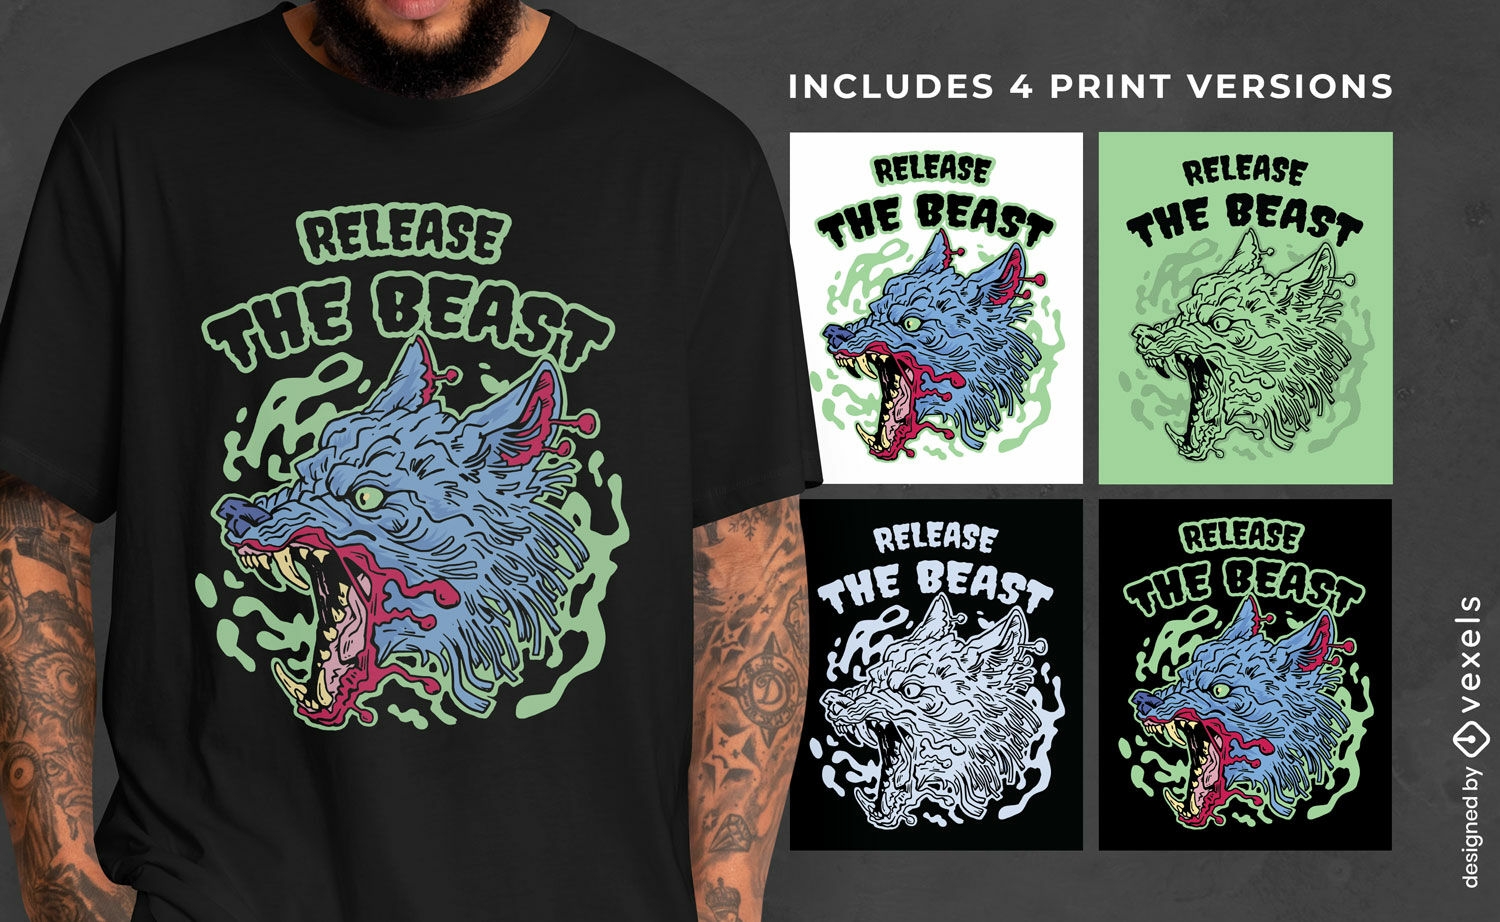 Farbvarianten des Wolf-Tier-Monster-T-Shirt-Designs